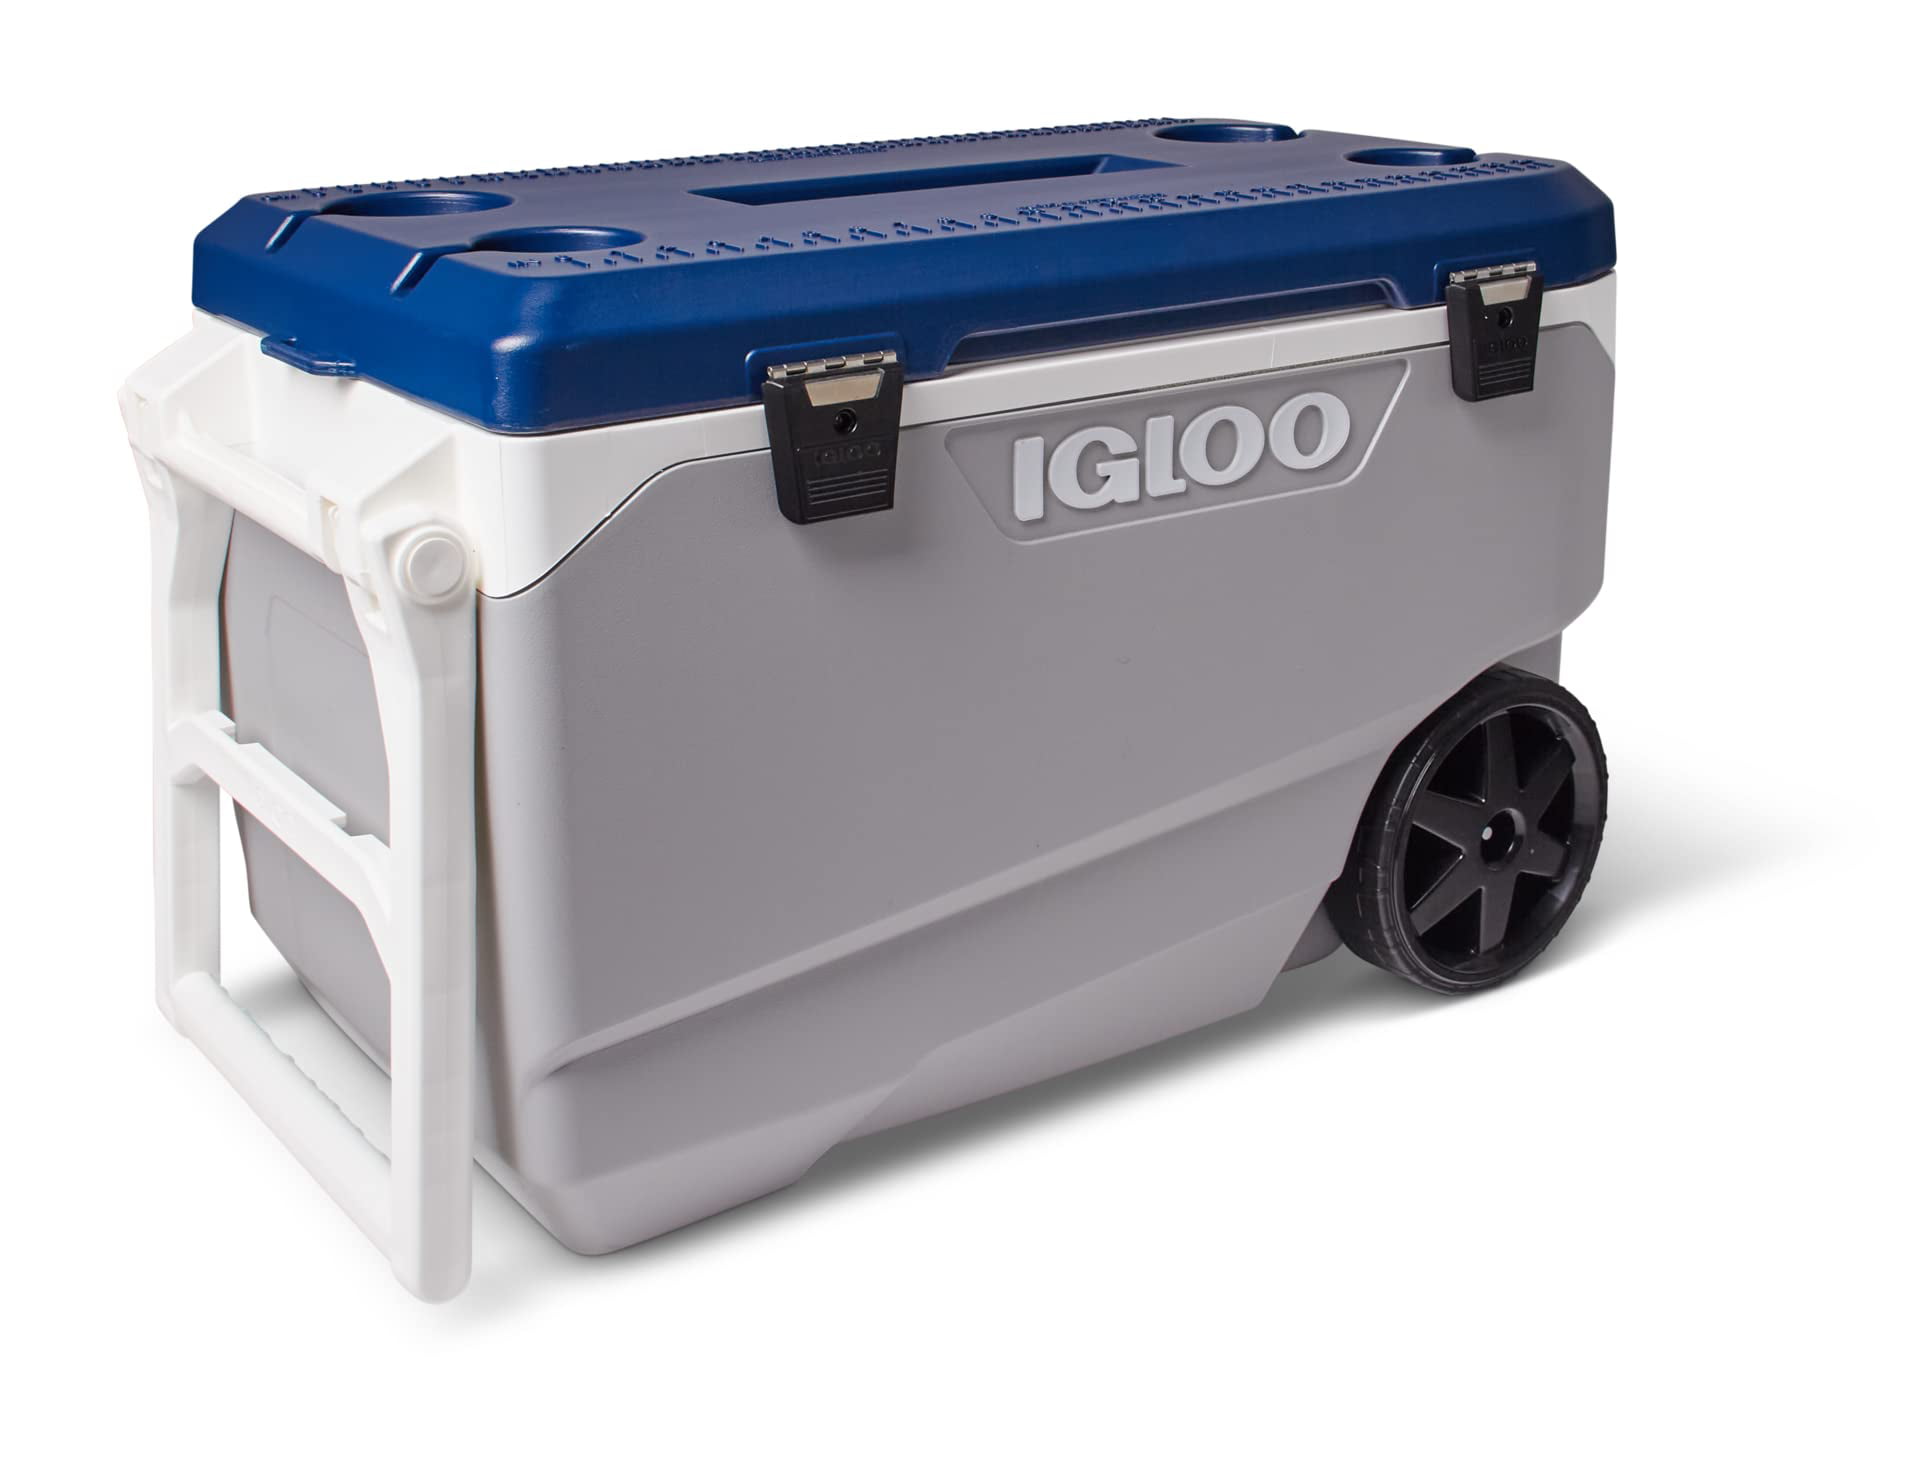 Igloo 8029343 90 qt. Latitude Roller Cooler, Blue & Gray